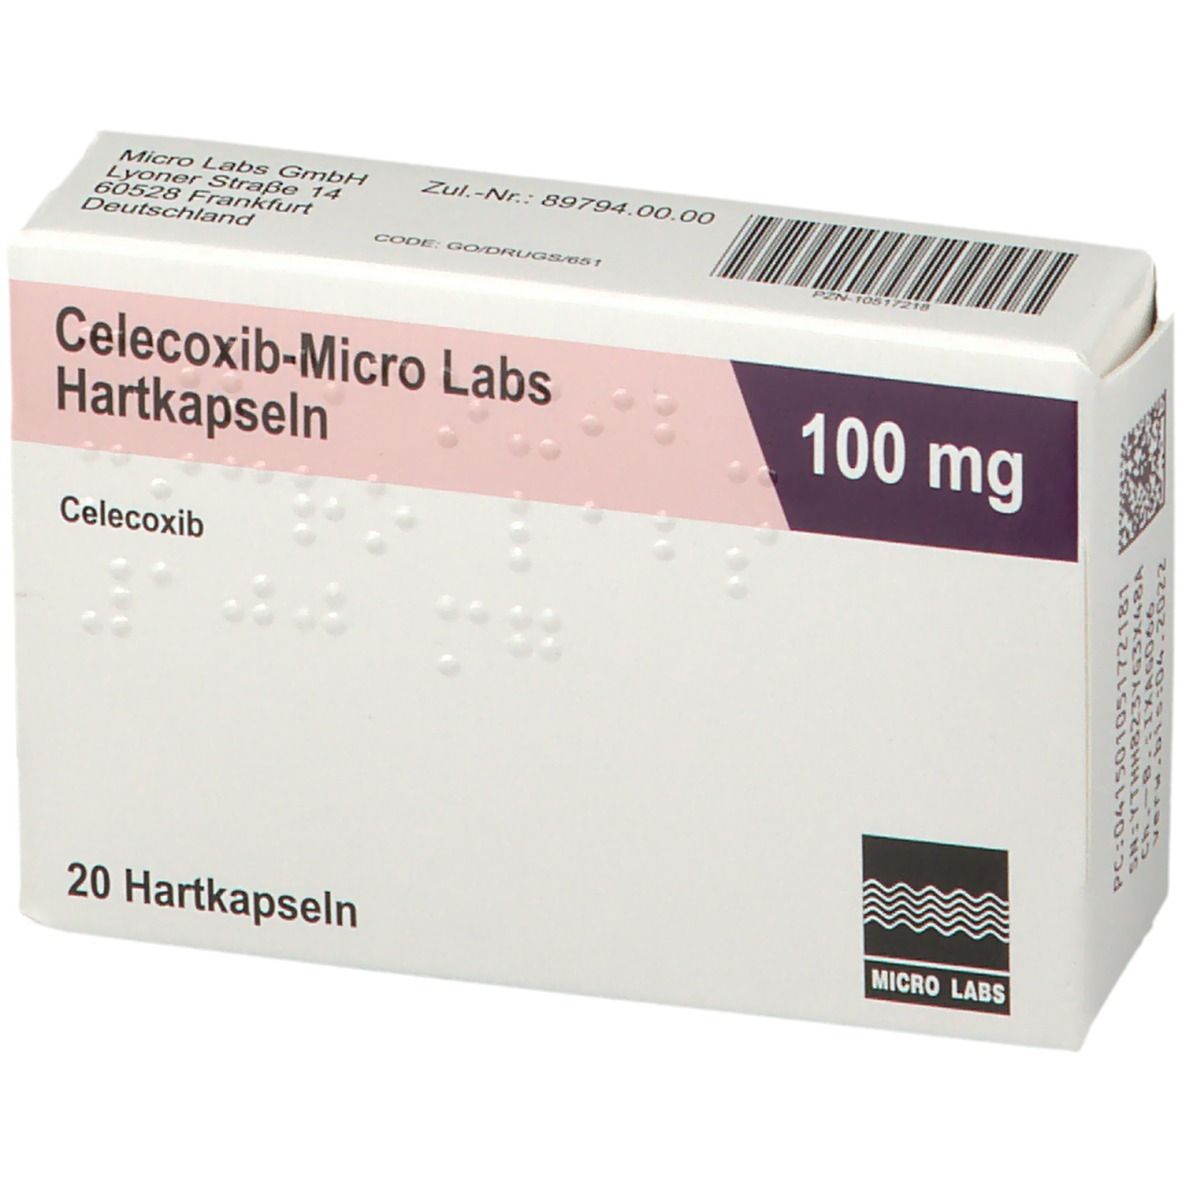 Celecoxib micro labs 100 mg